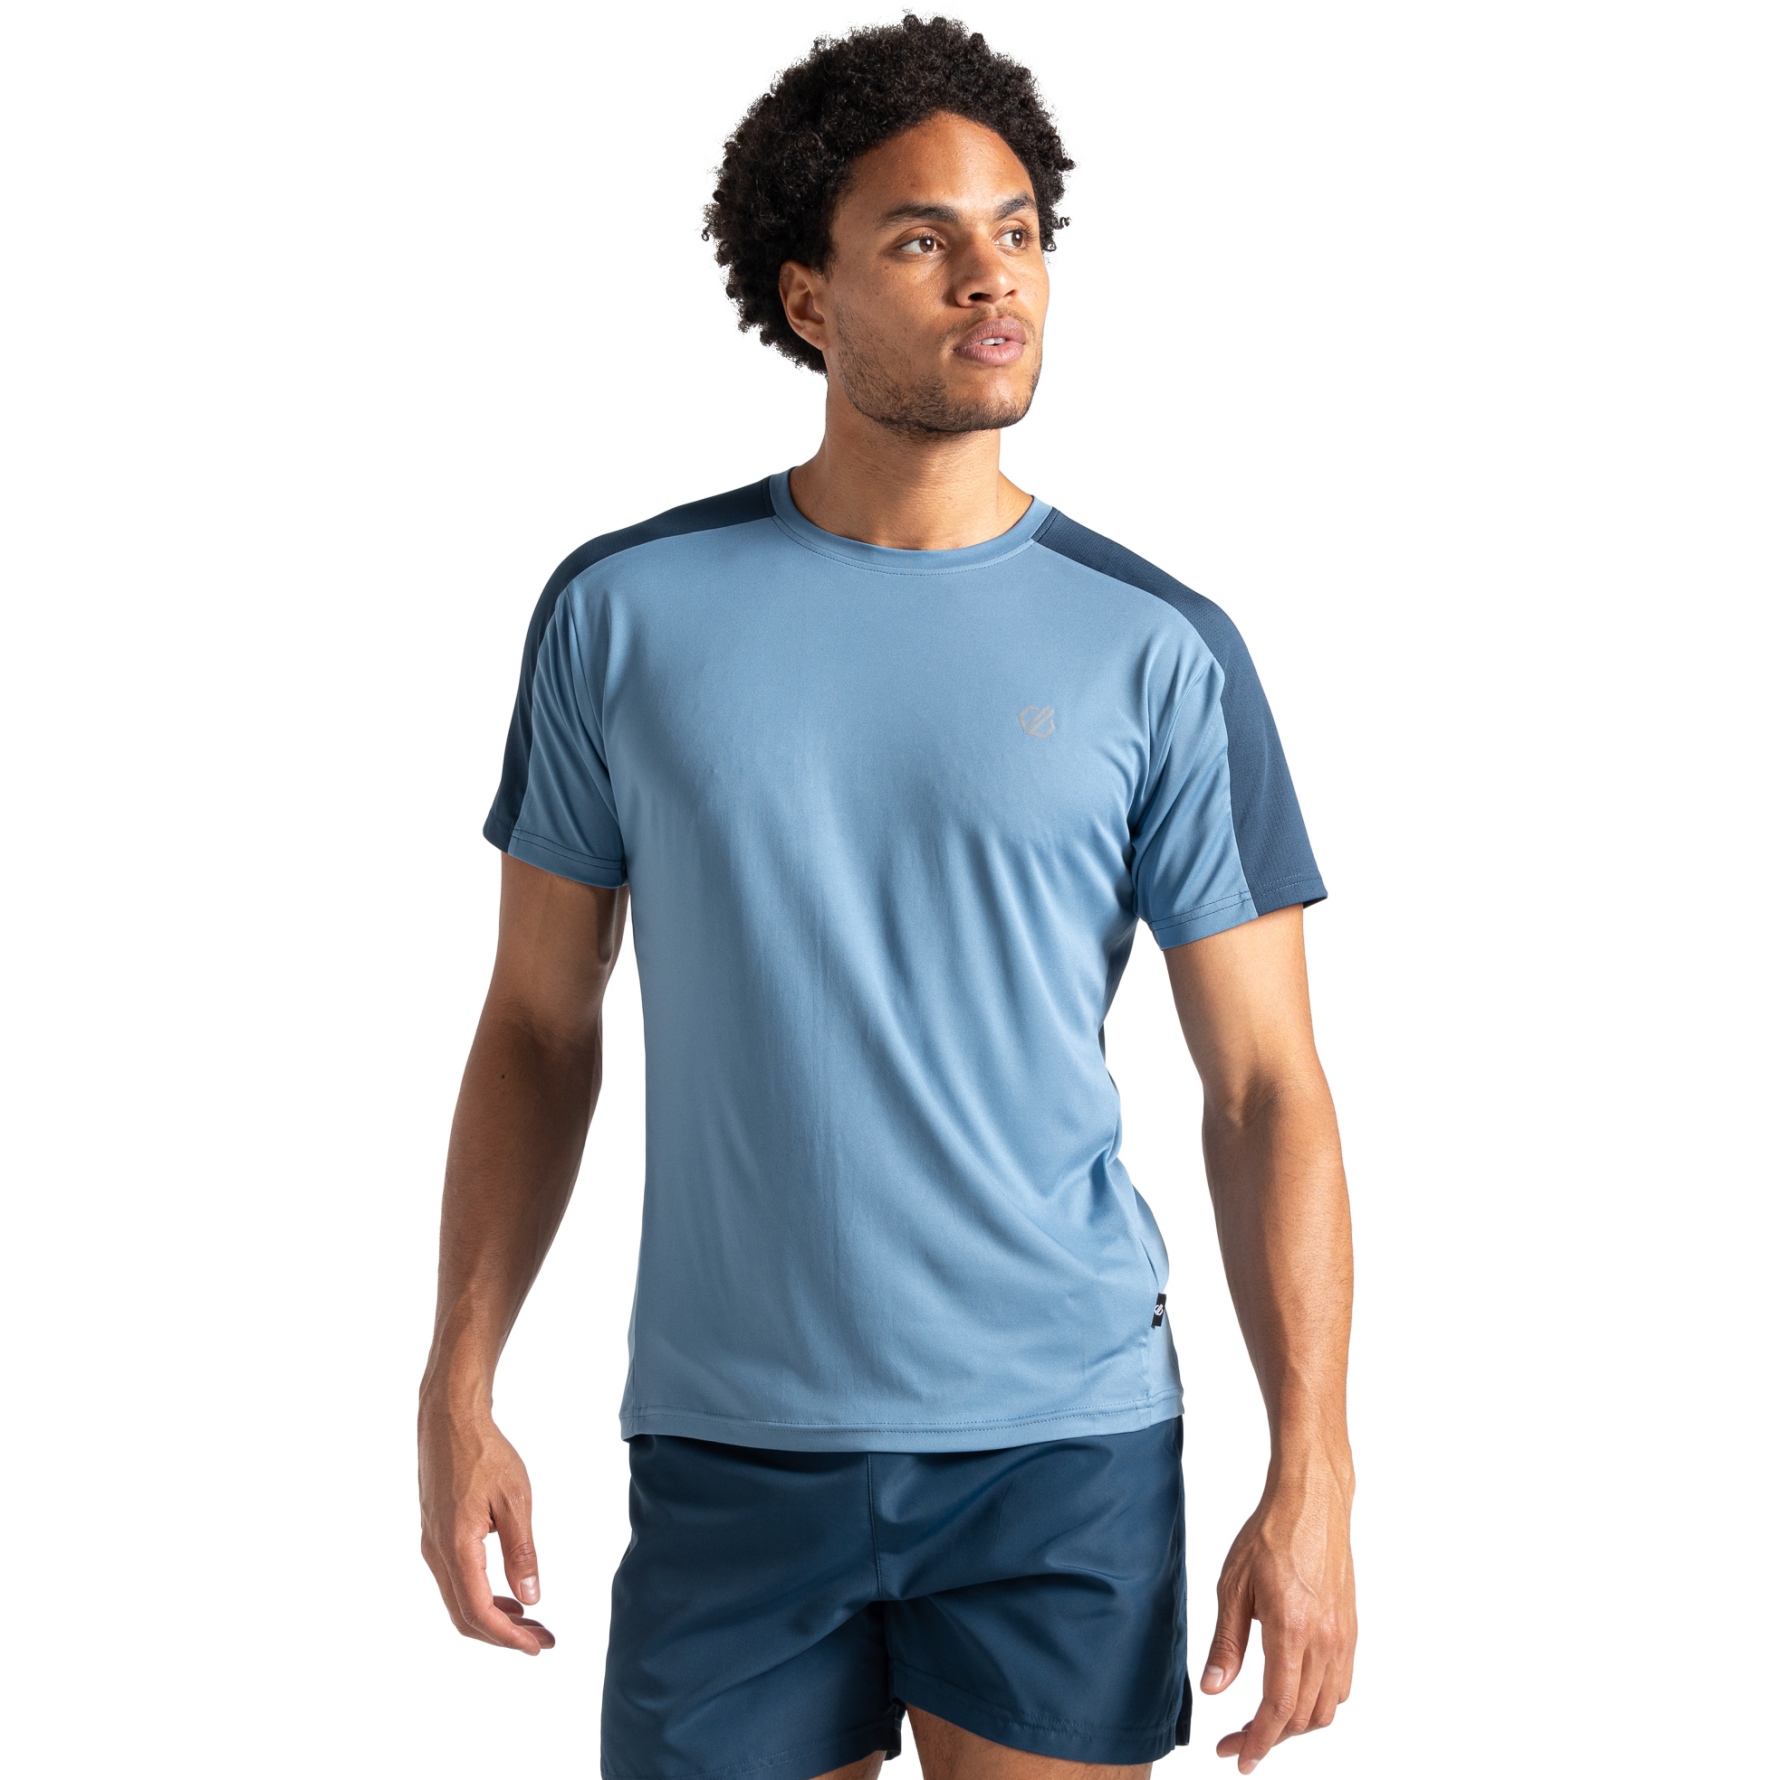 Produktbild von Dare 2b Discernible II T-Shirt Herren - XAP Coronet Blue/Moonlight Denim